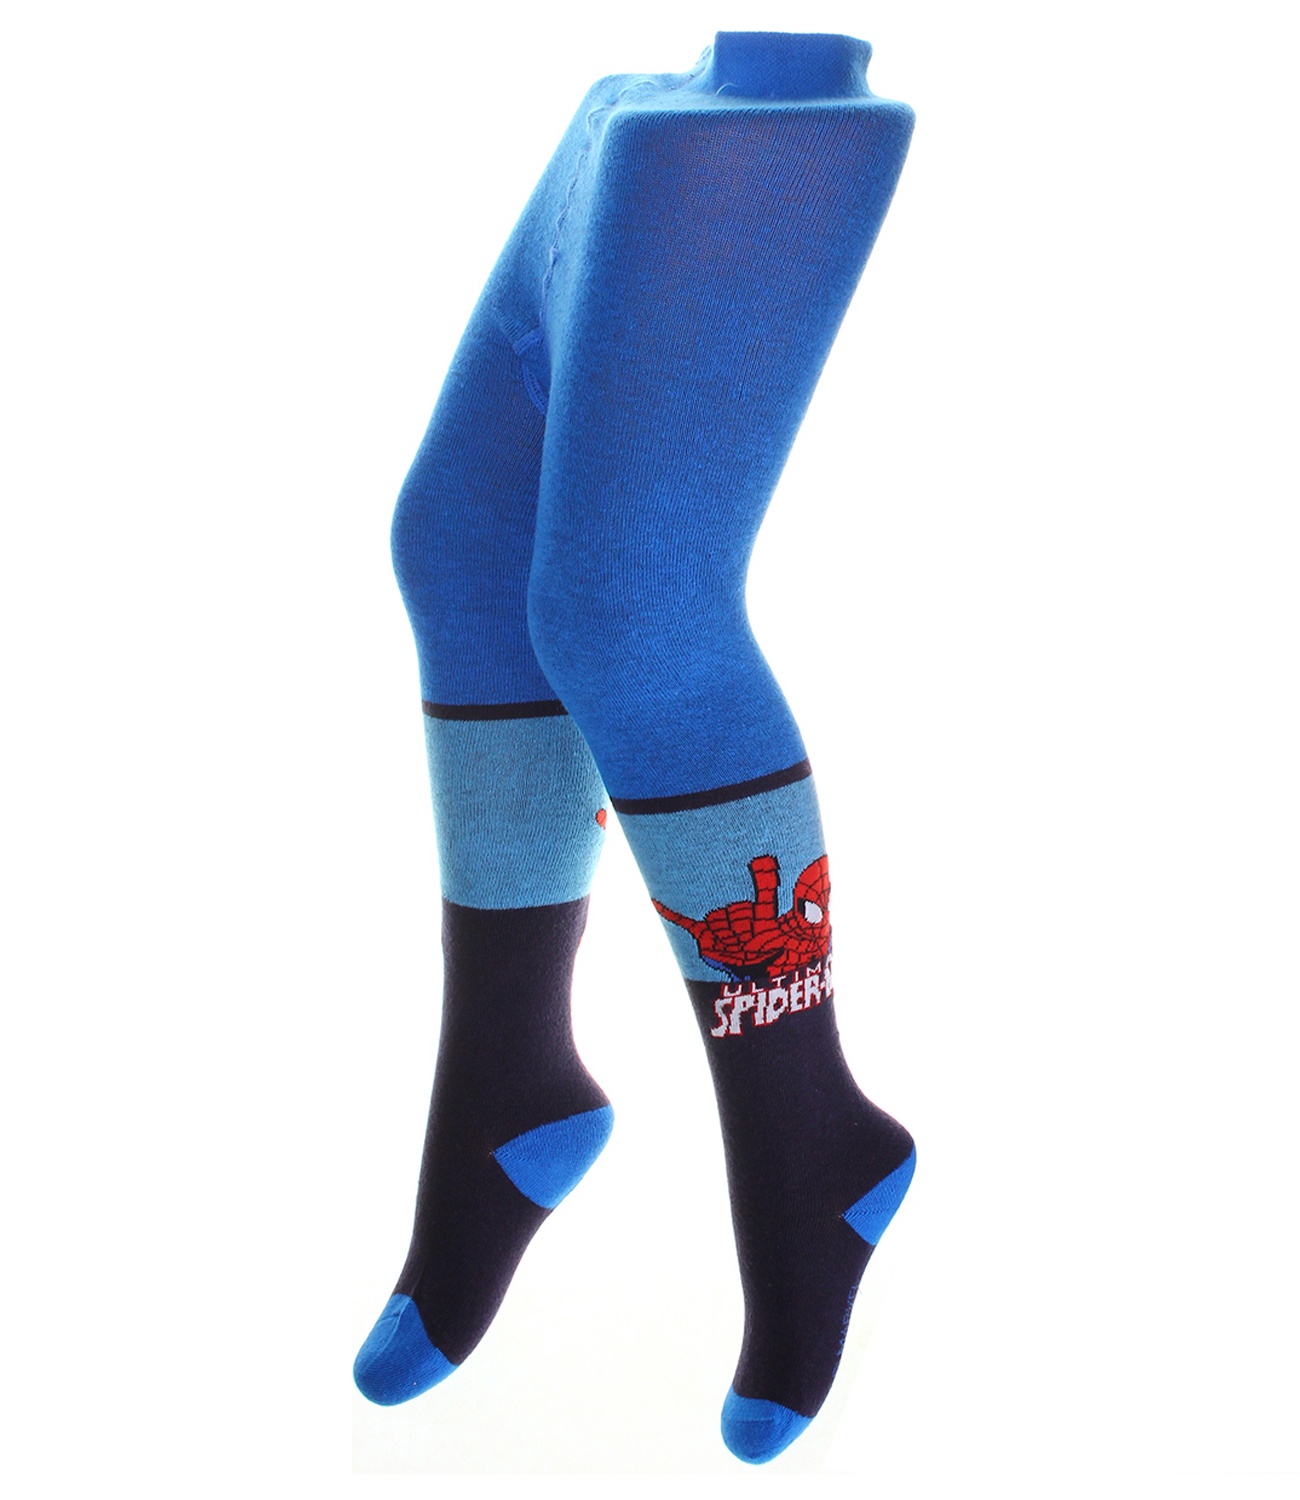 Spiderman® Dres chilot (92-134) Albastru